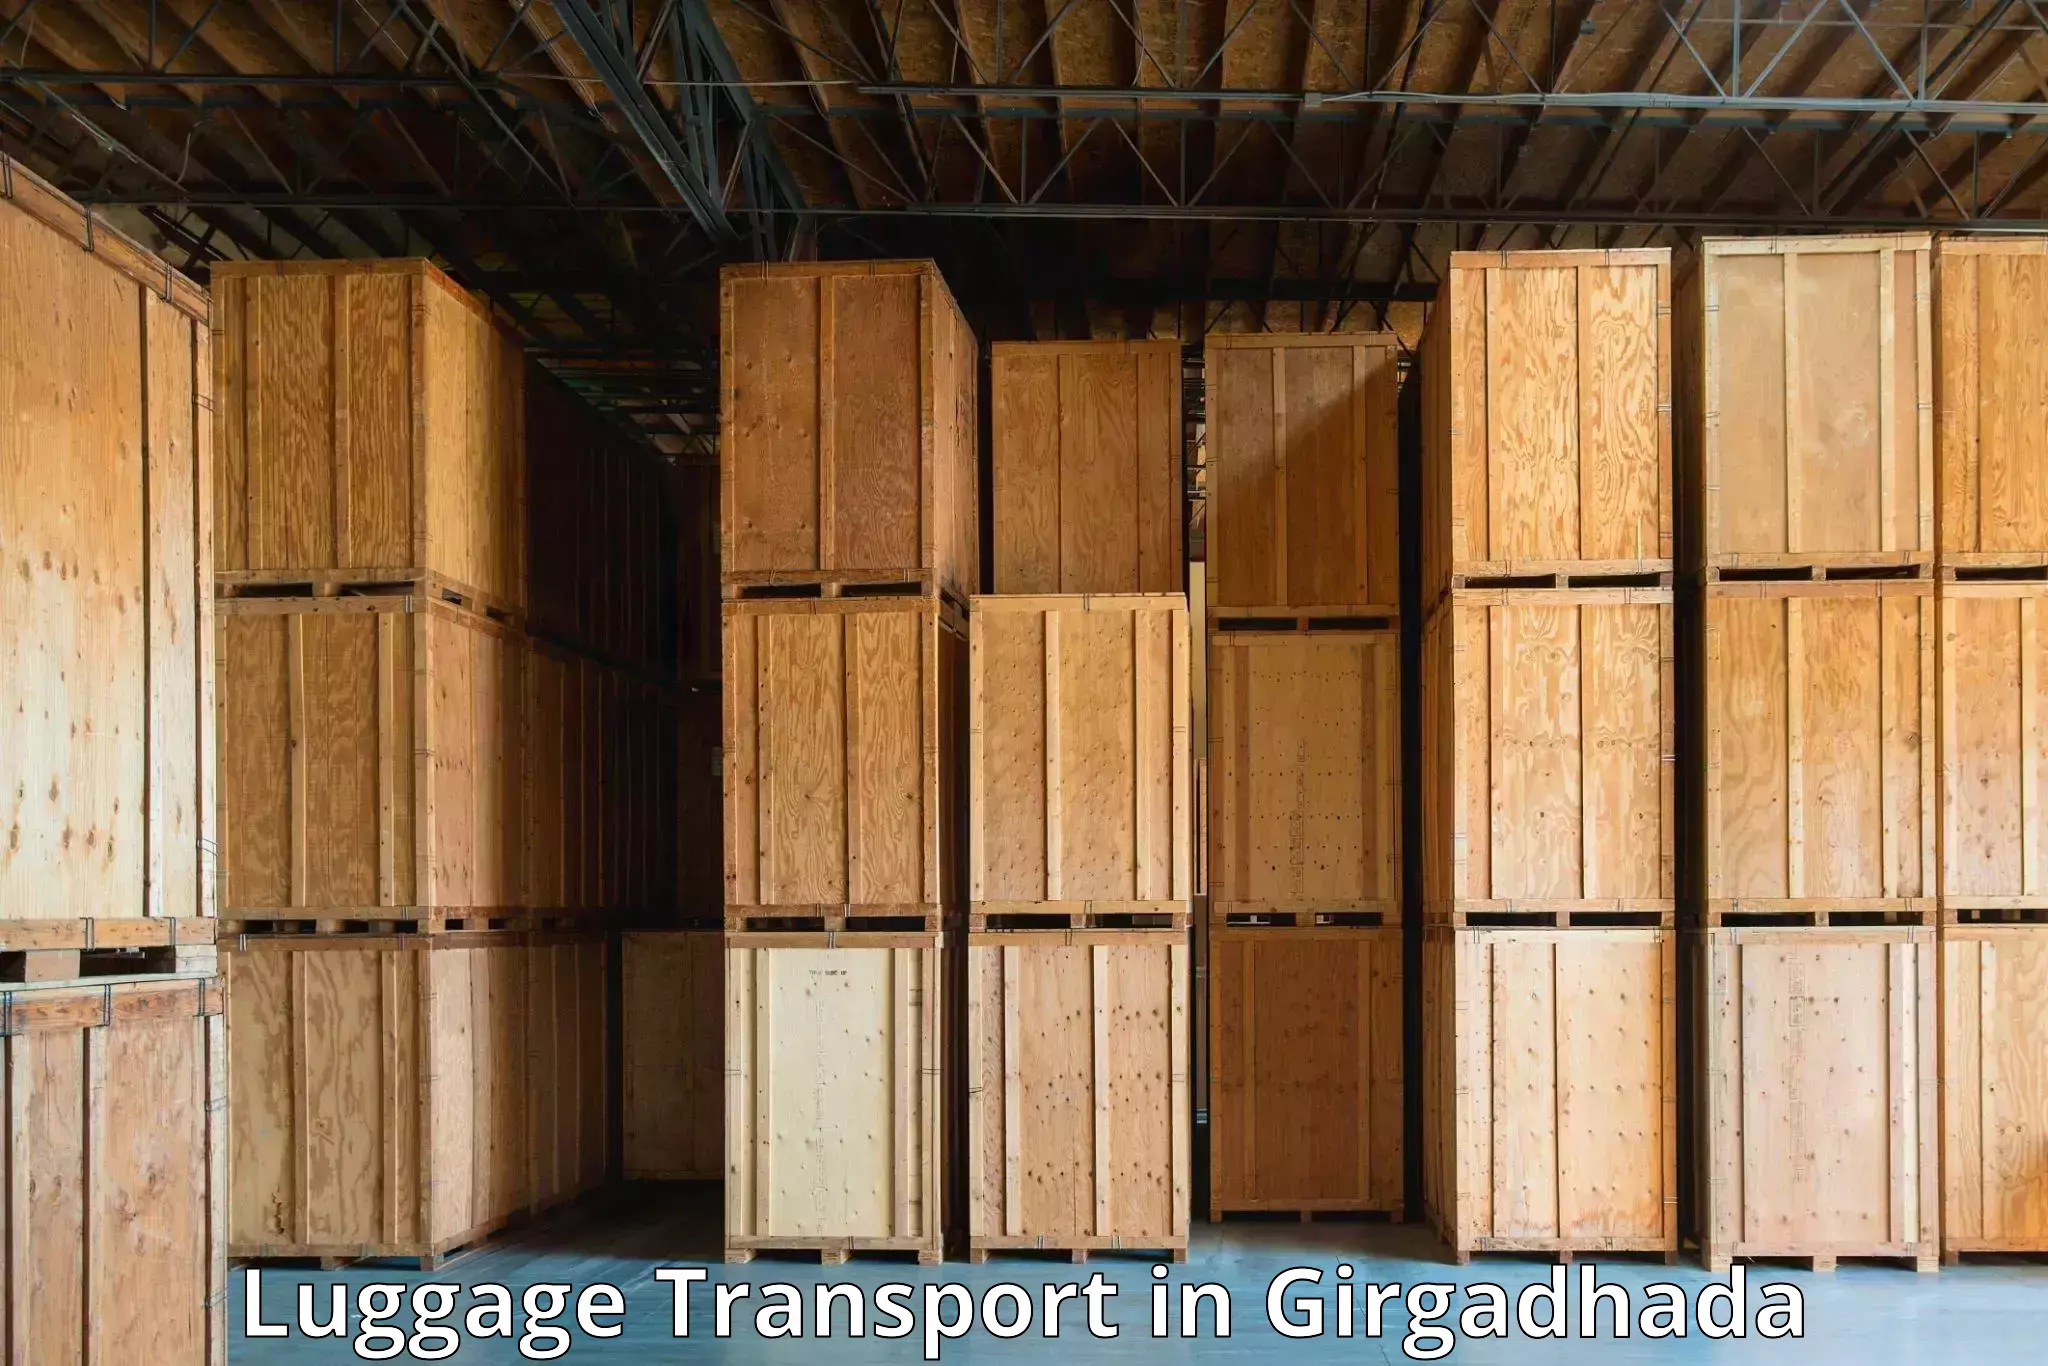 Baggage transport cost in Girgadhada